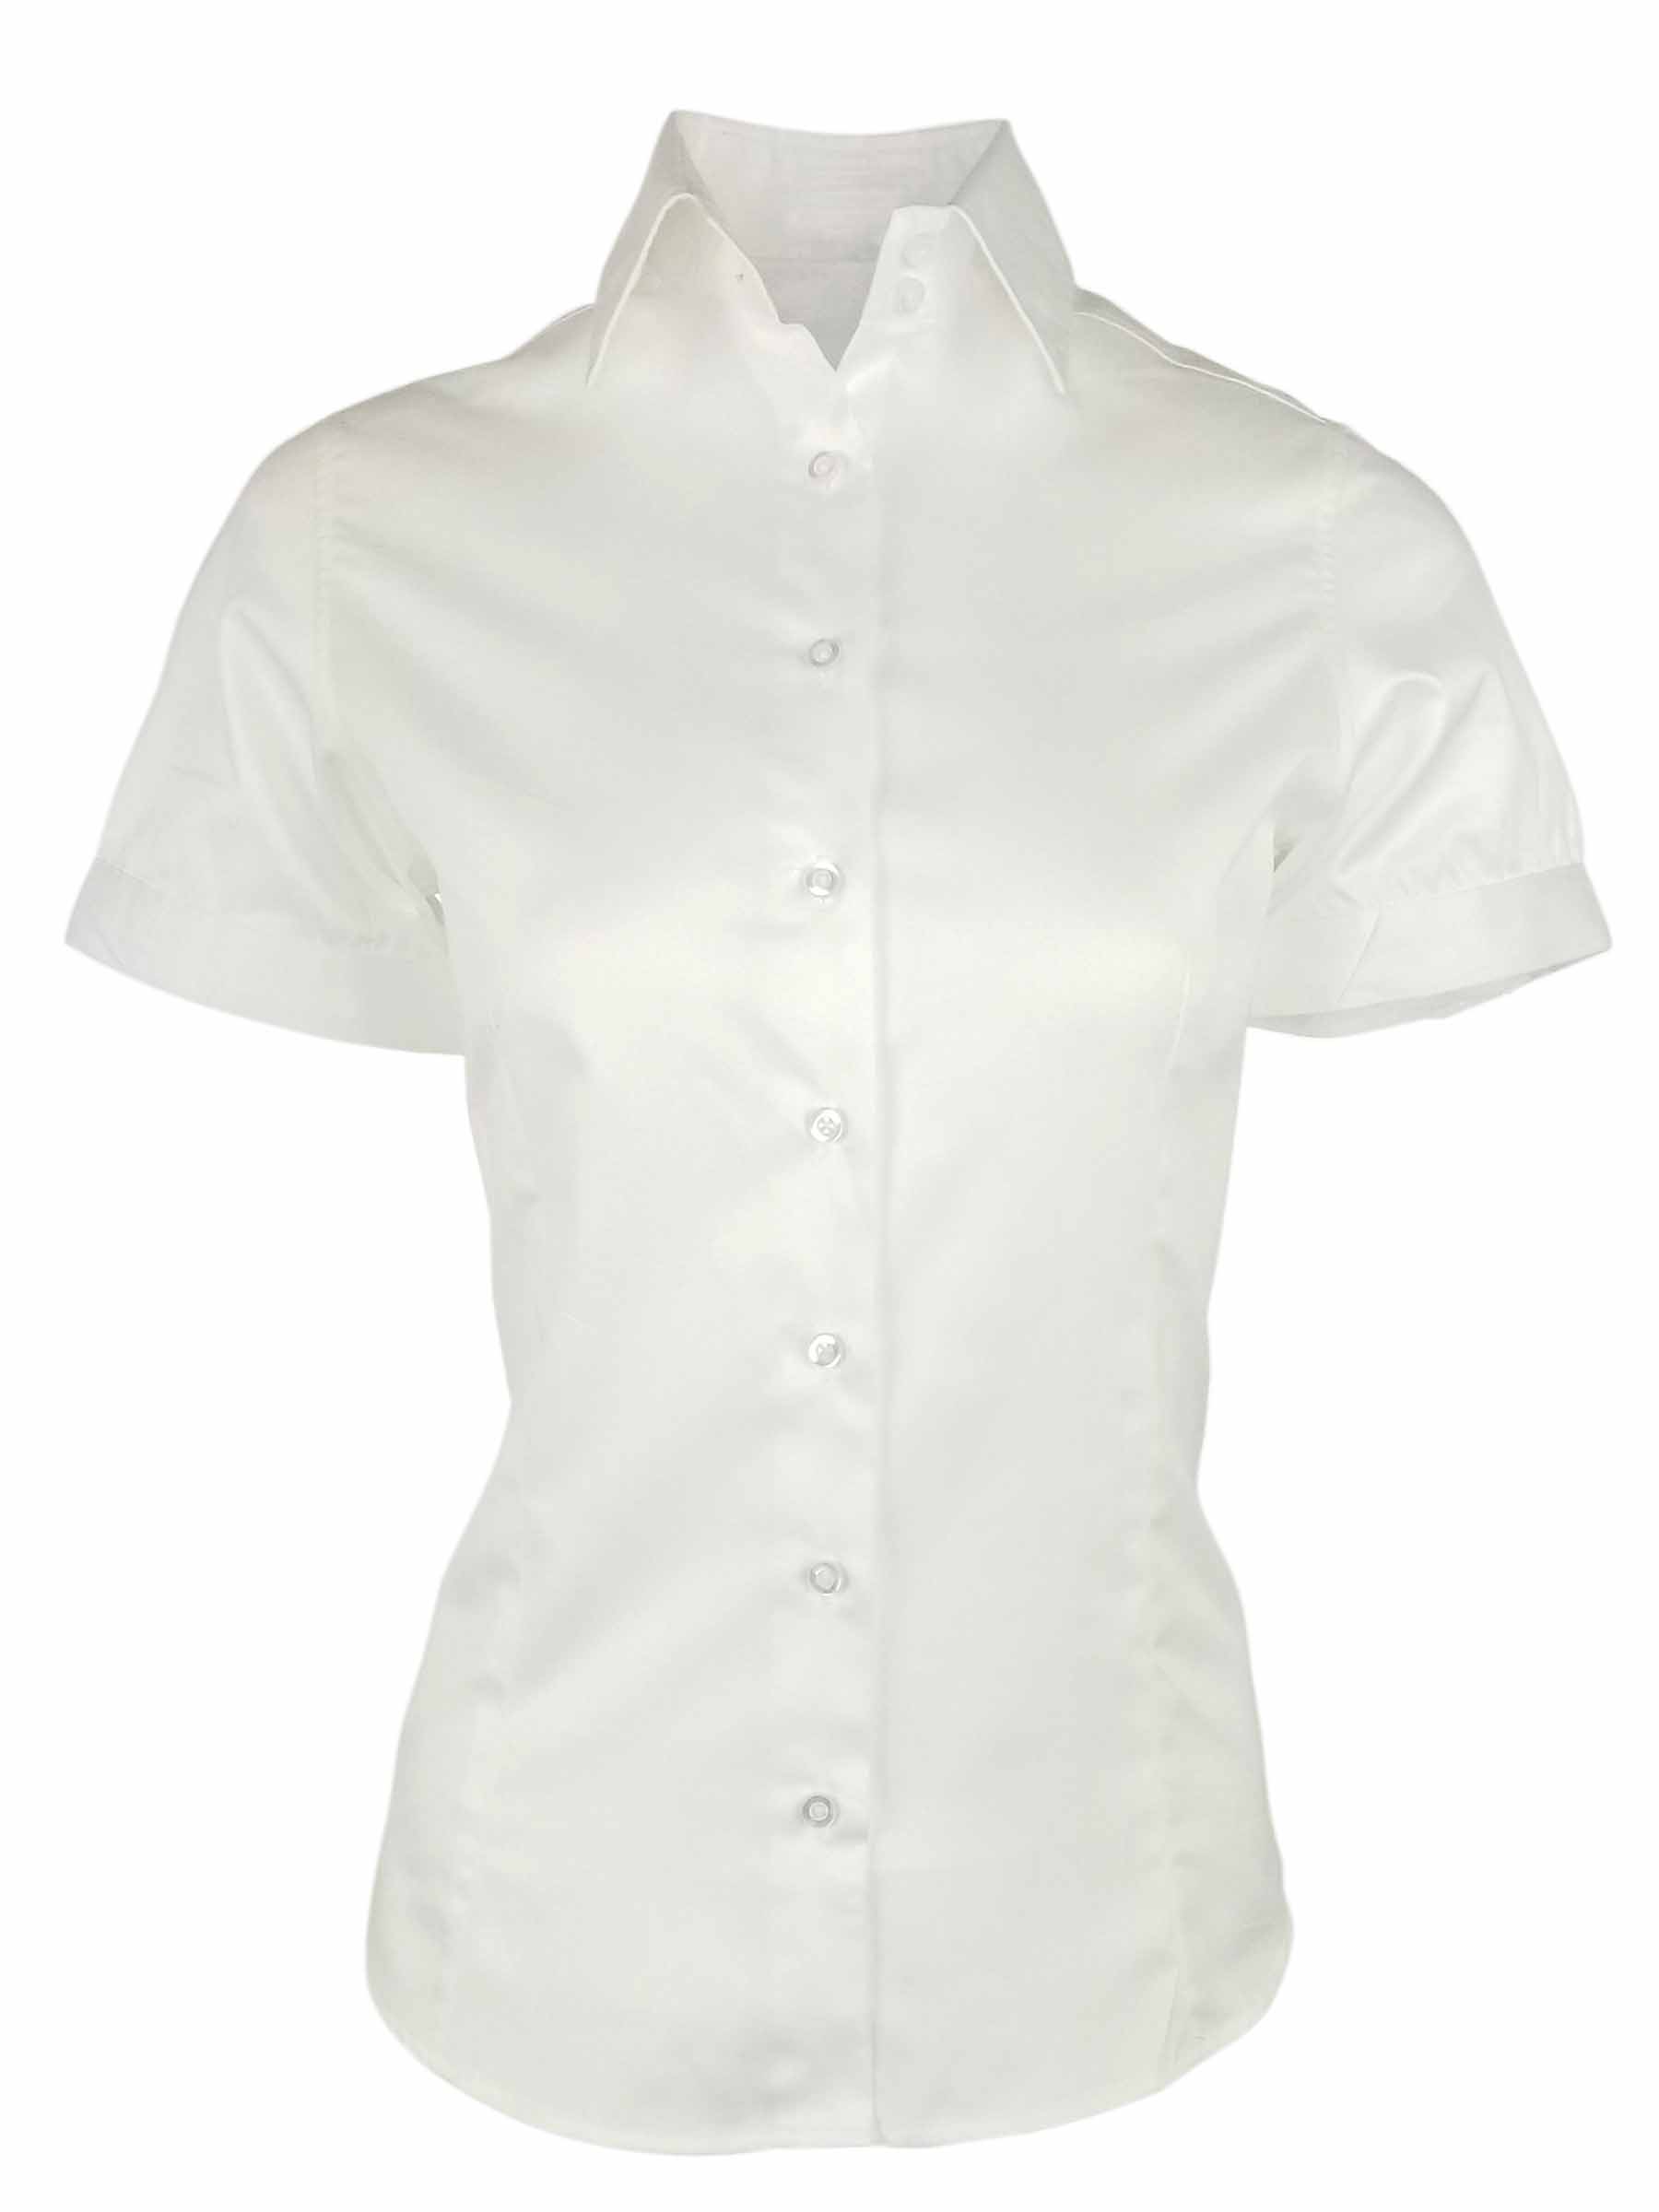 Women's Everyday Basic Shirt - White Short Sleeve | Uniform Edit